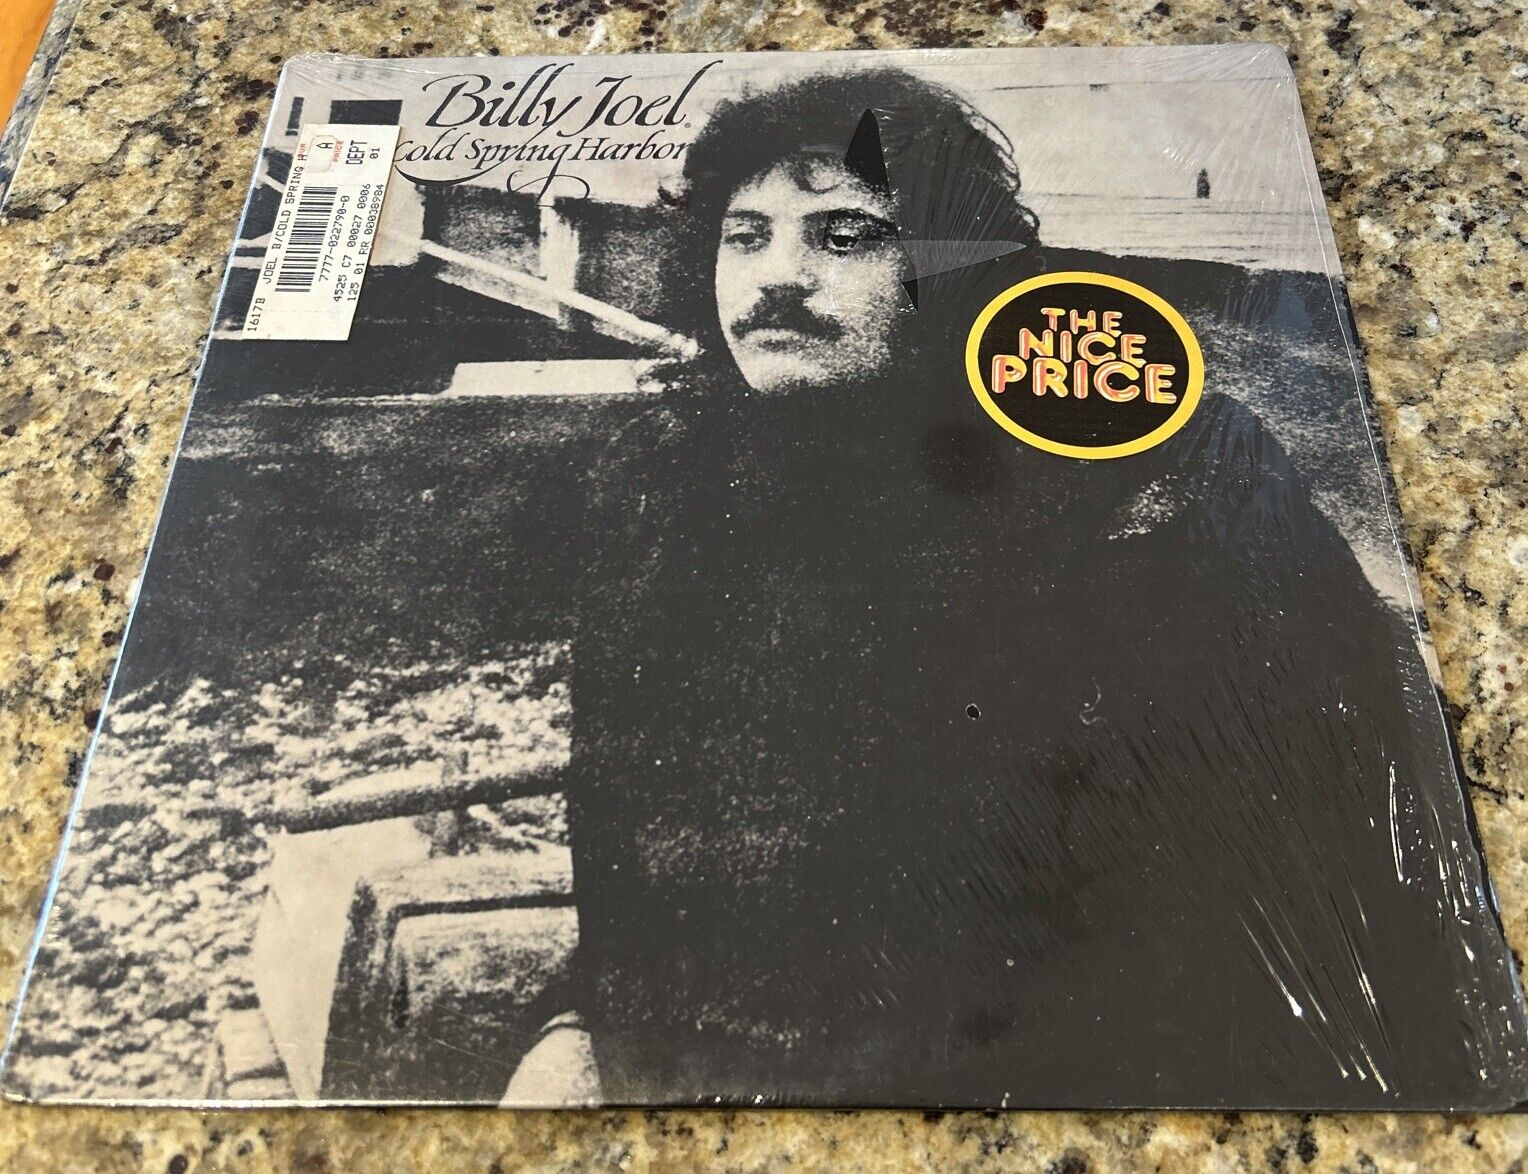 BILLY JOEL - Cold Spring Harbor - Vinyl LP Record Album PC38984 COLUMBIA